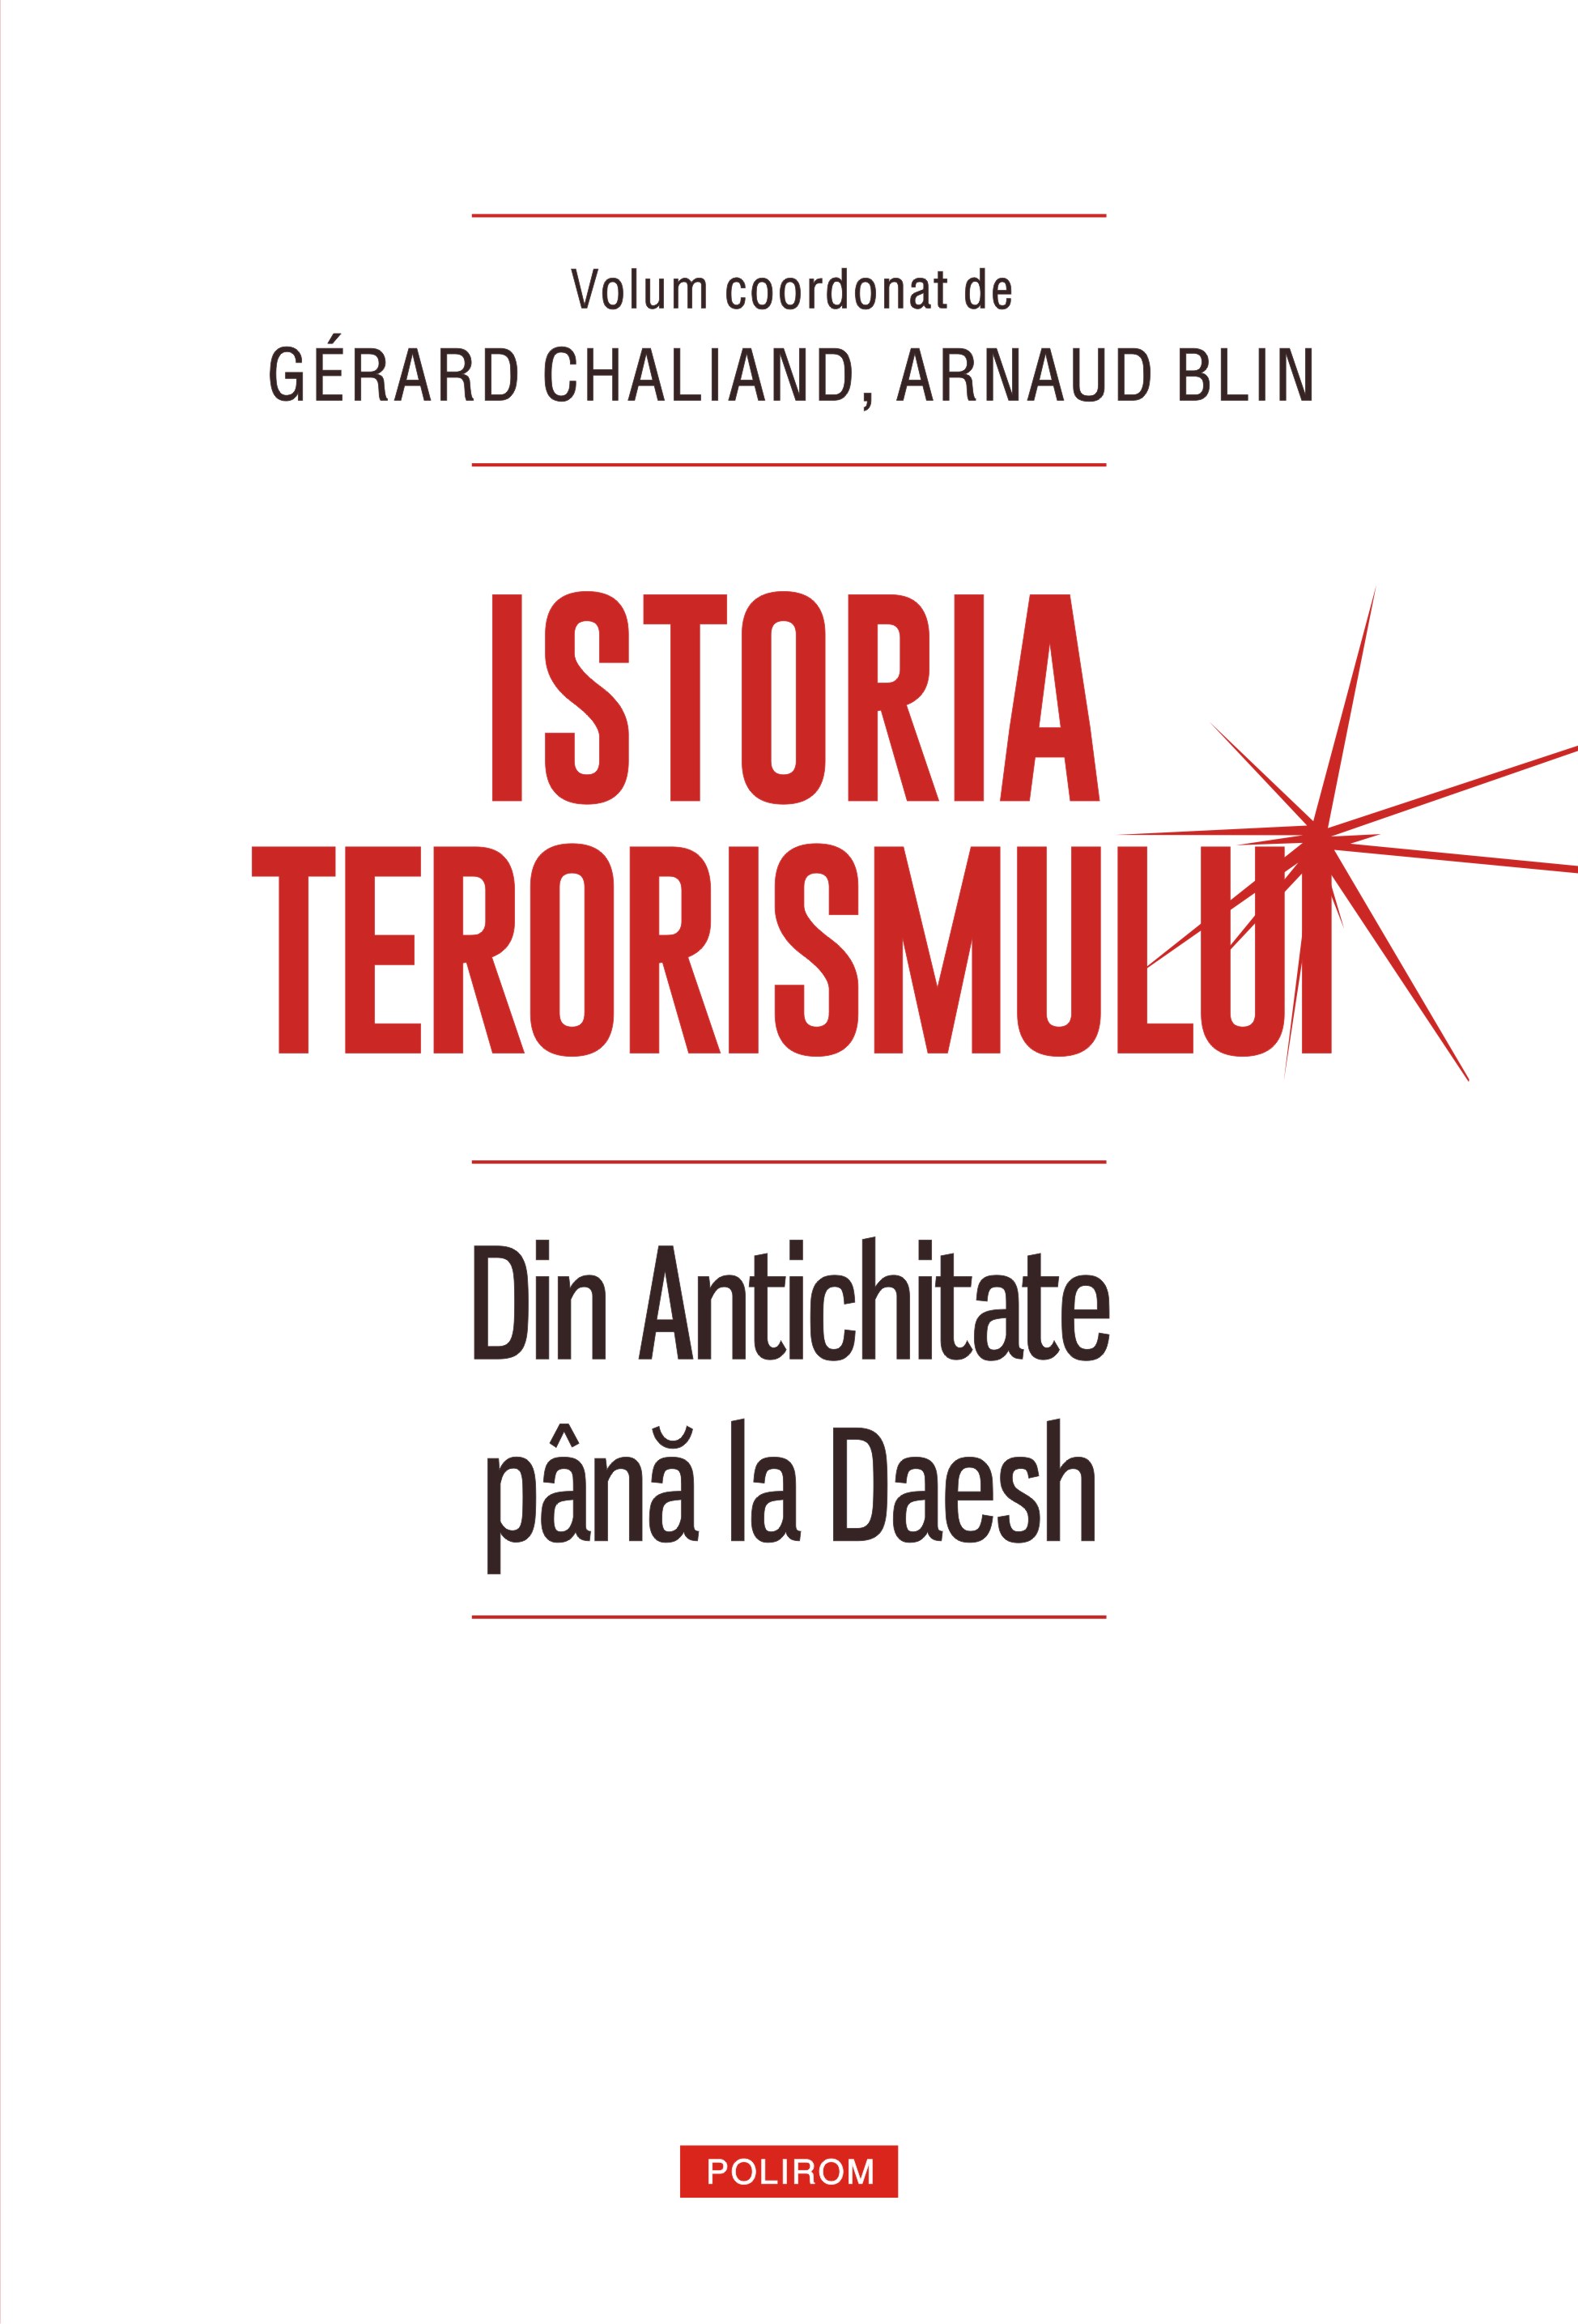 eBook Istoria terorismului din Antichitate pana la Daesh - Gerard Chaliand